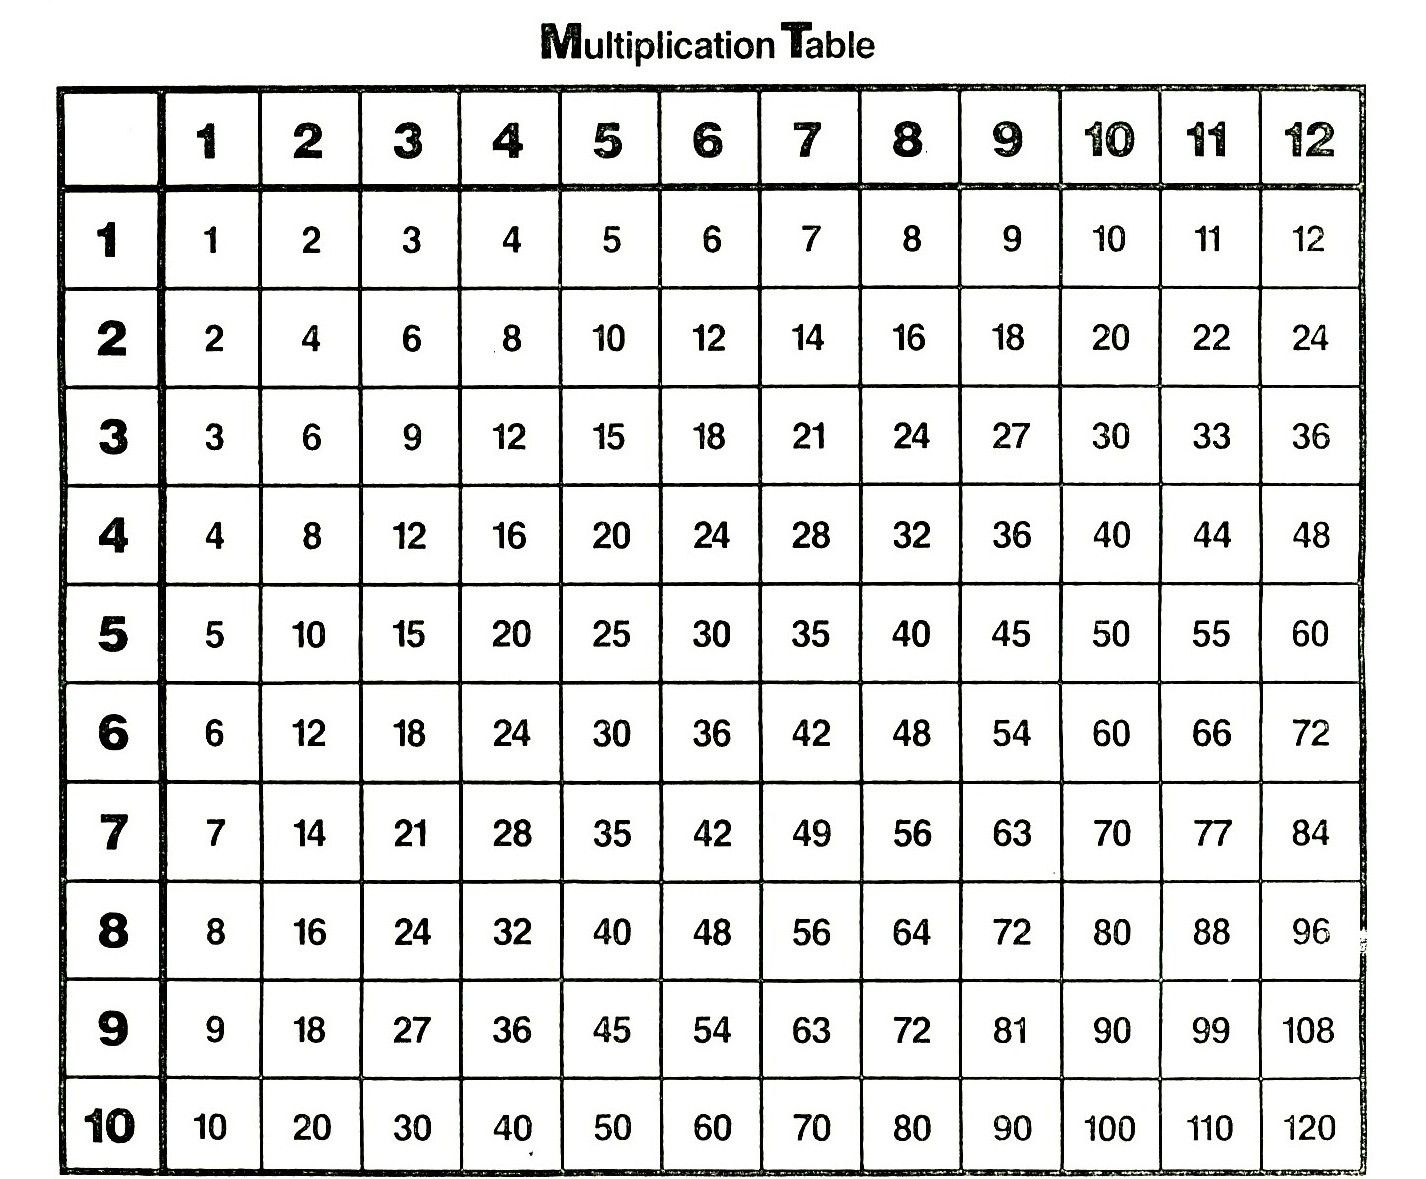 Multiplication Table Pdf Printable In 2020 | Multiplication